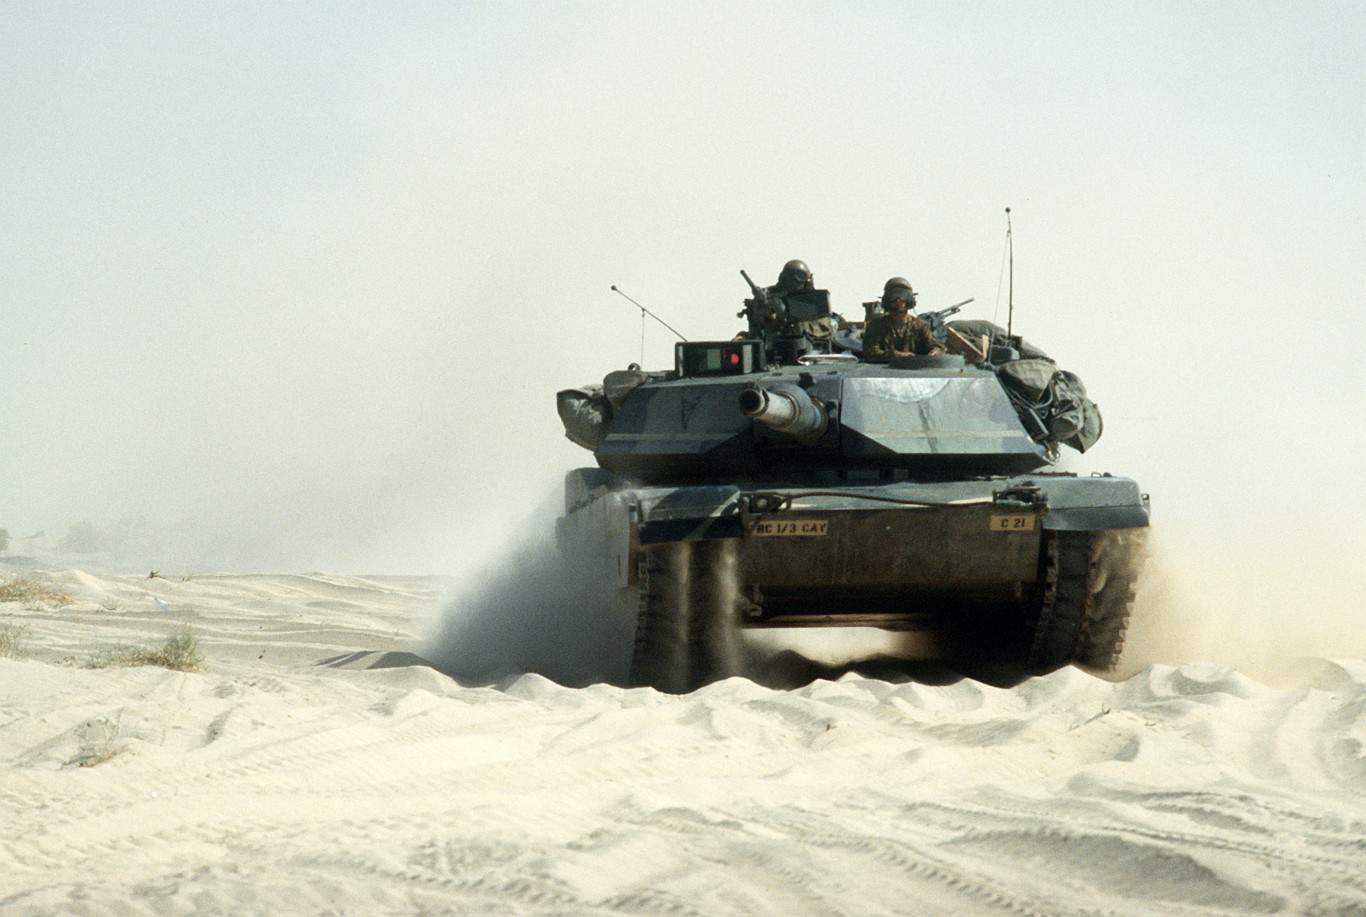 Saudi+Arabia+tanks | Operation Desert Storm